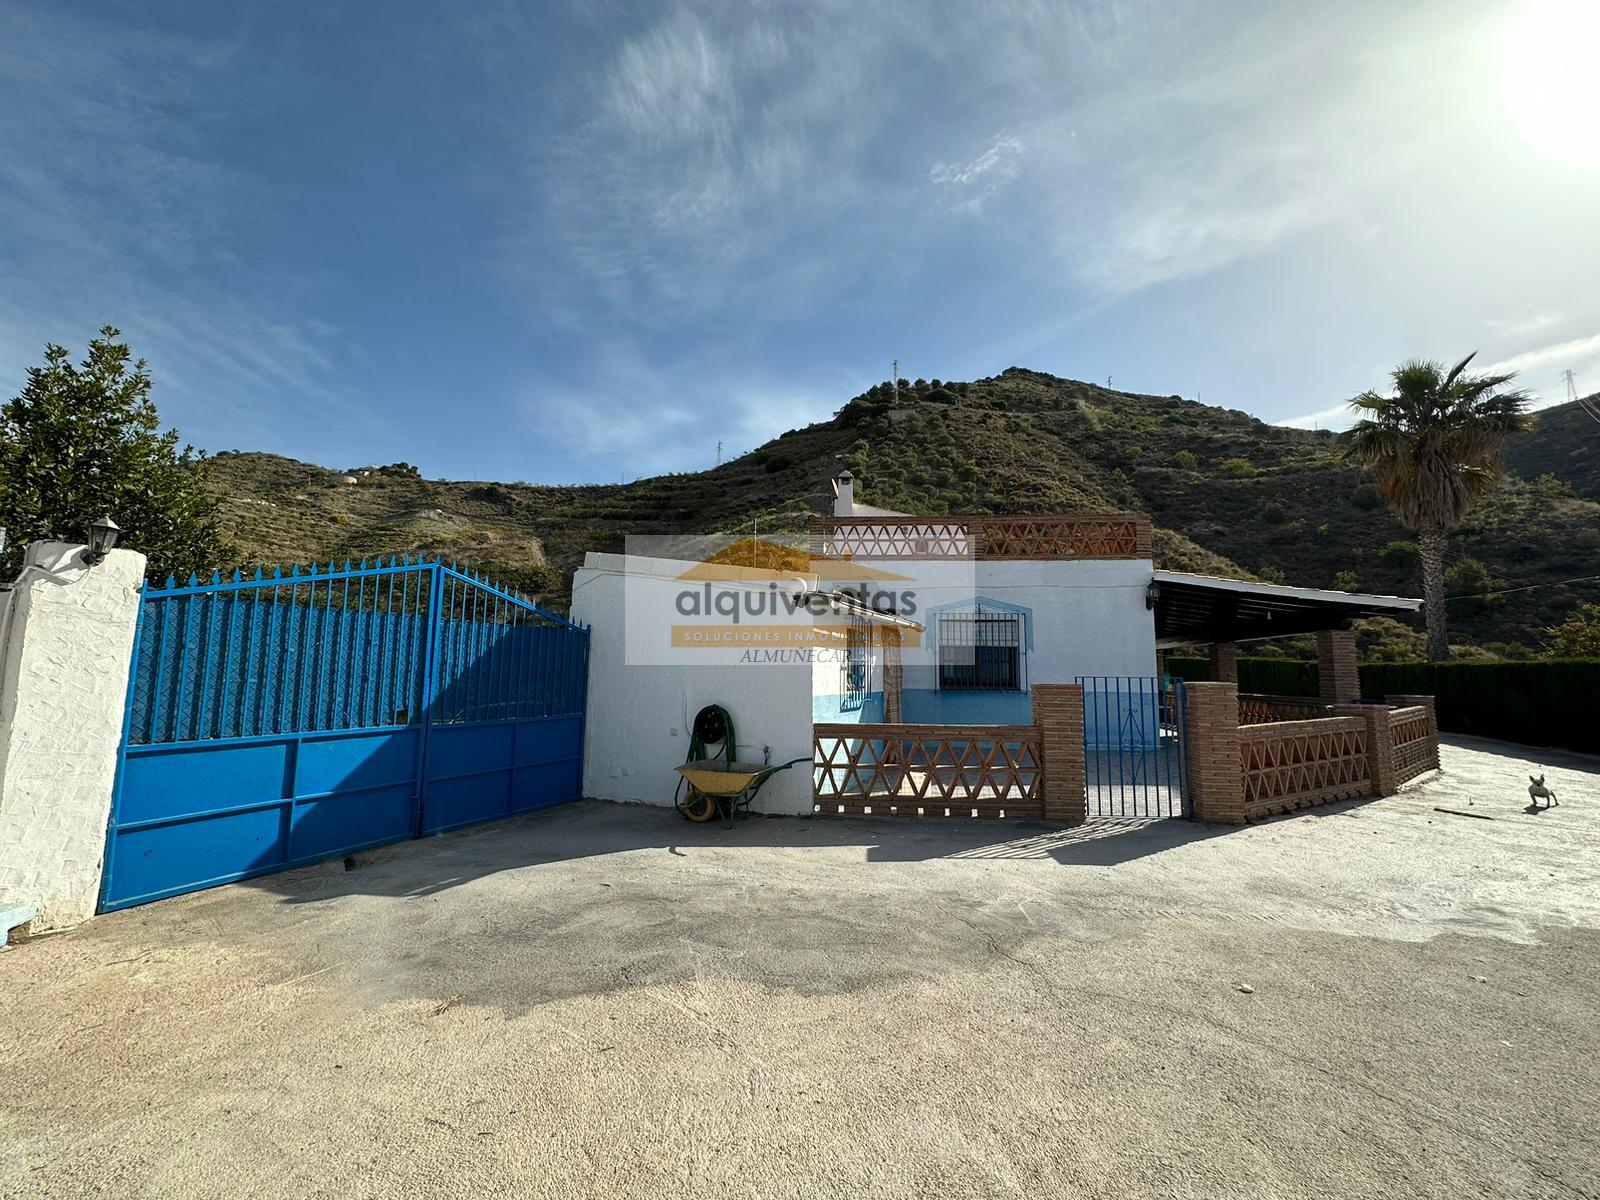 For sale of house in La Herradura